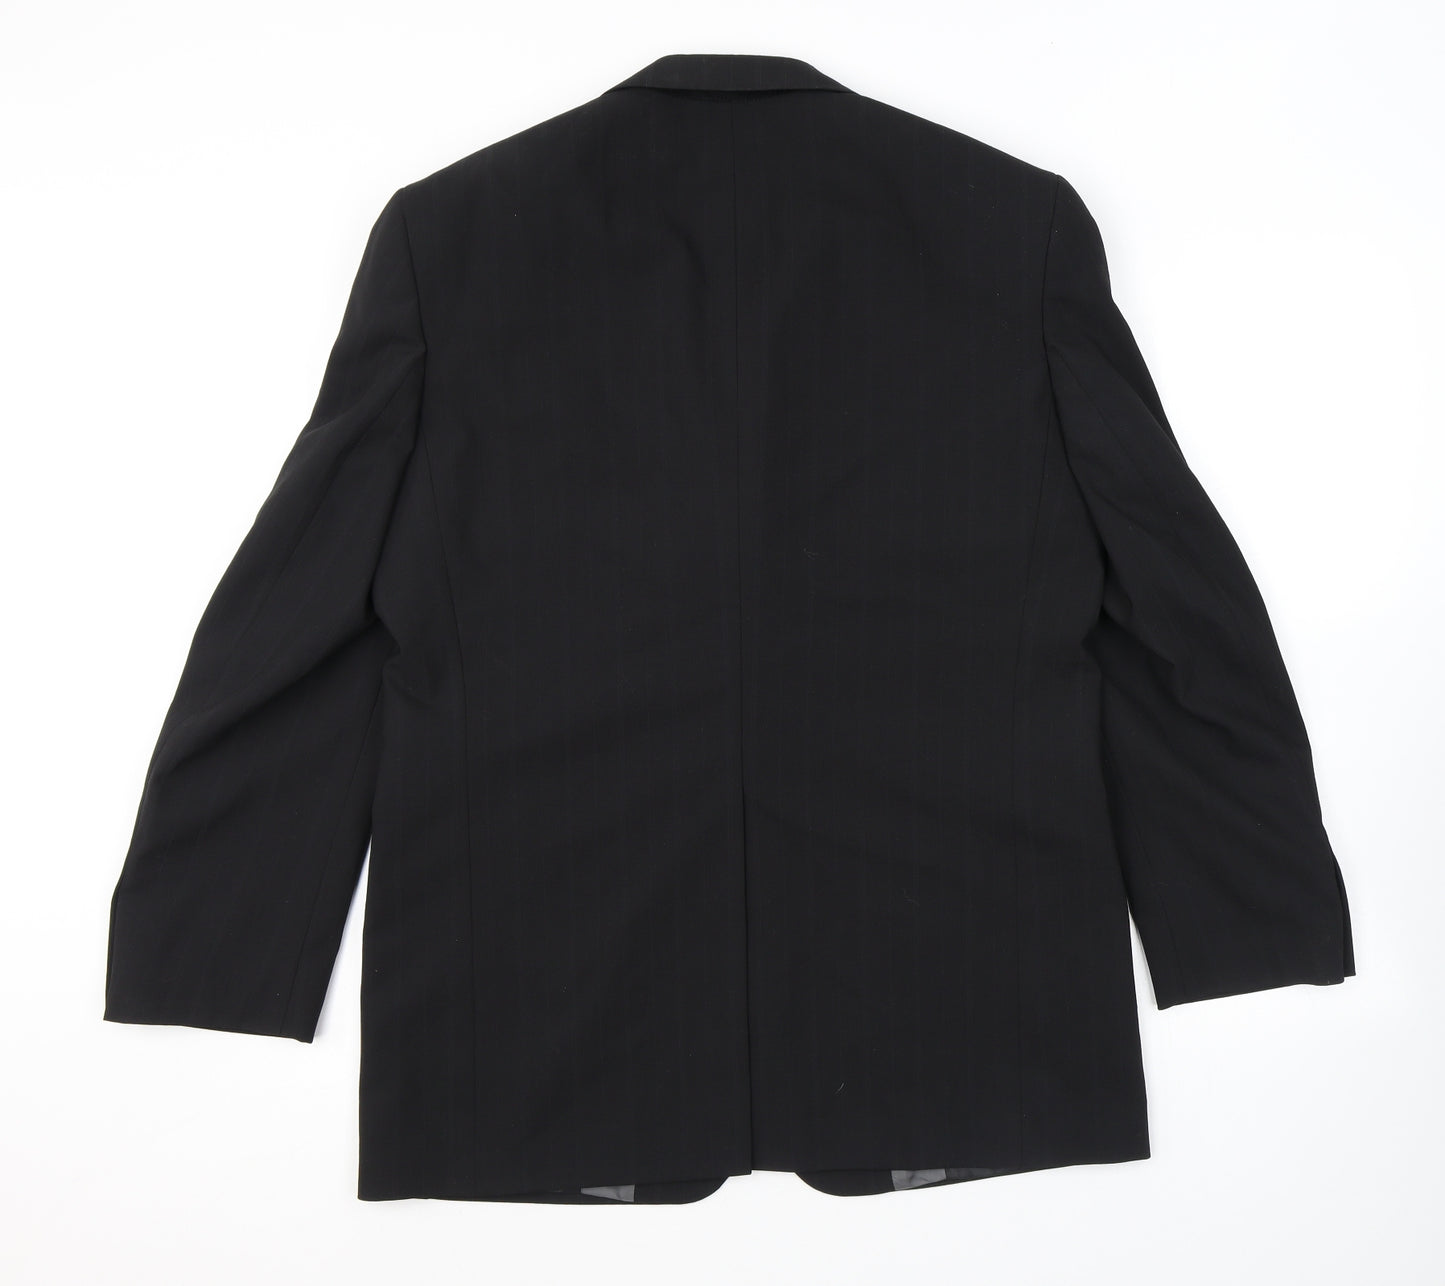 NEXT Mens Black Polyester Jacket Suit Jacket Size 40 Regular